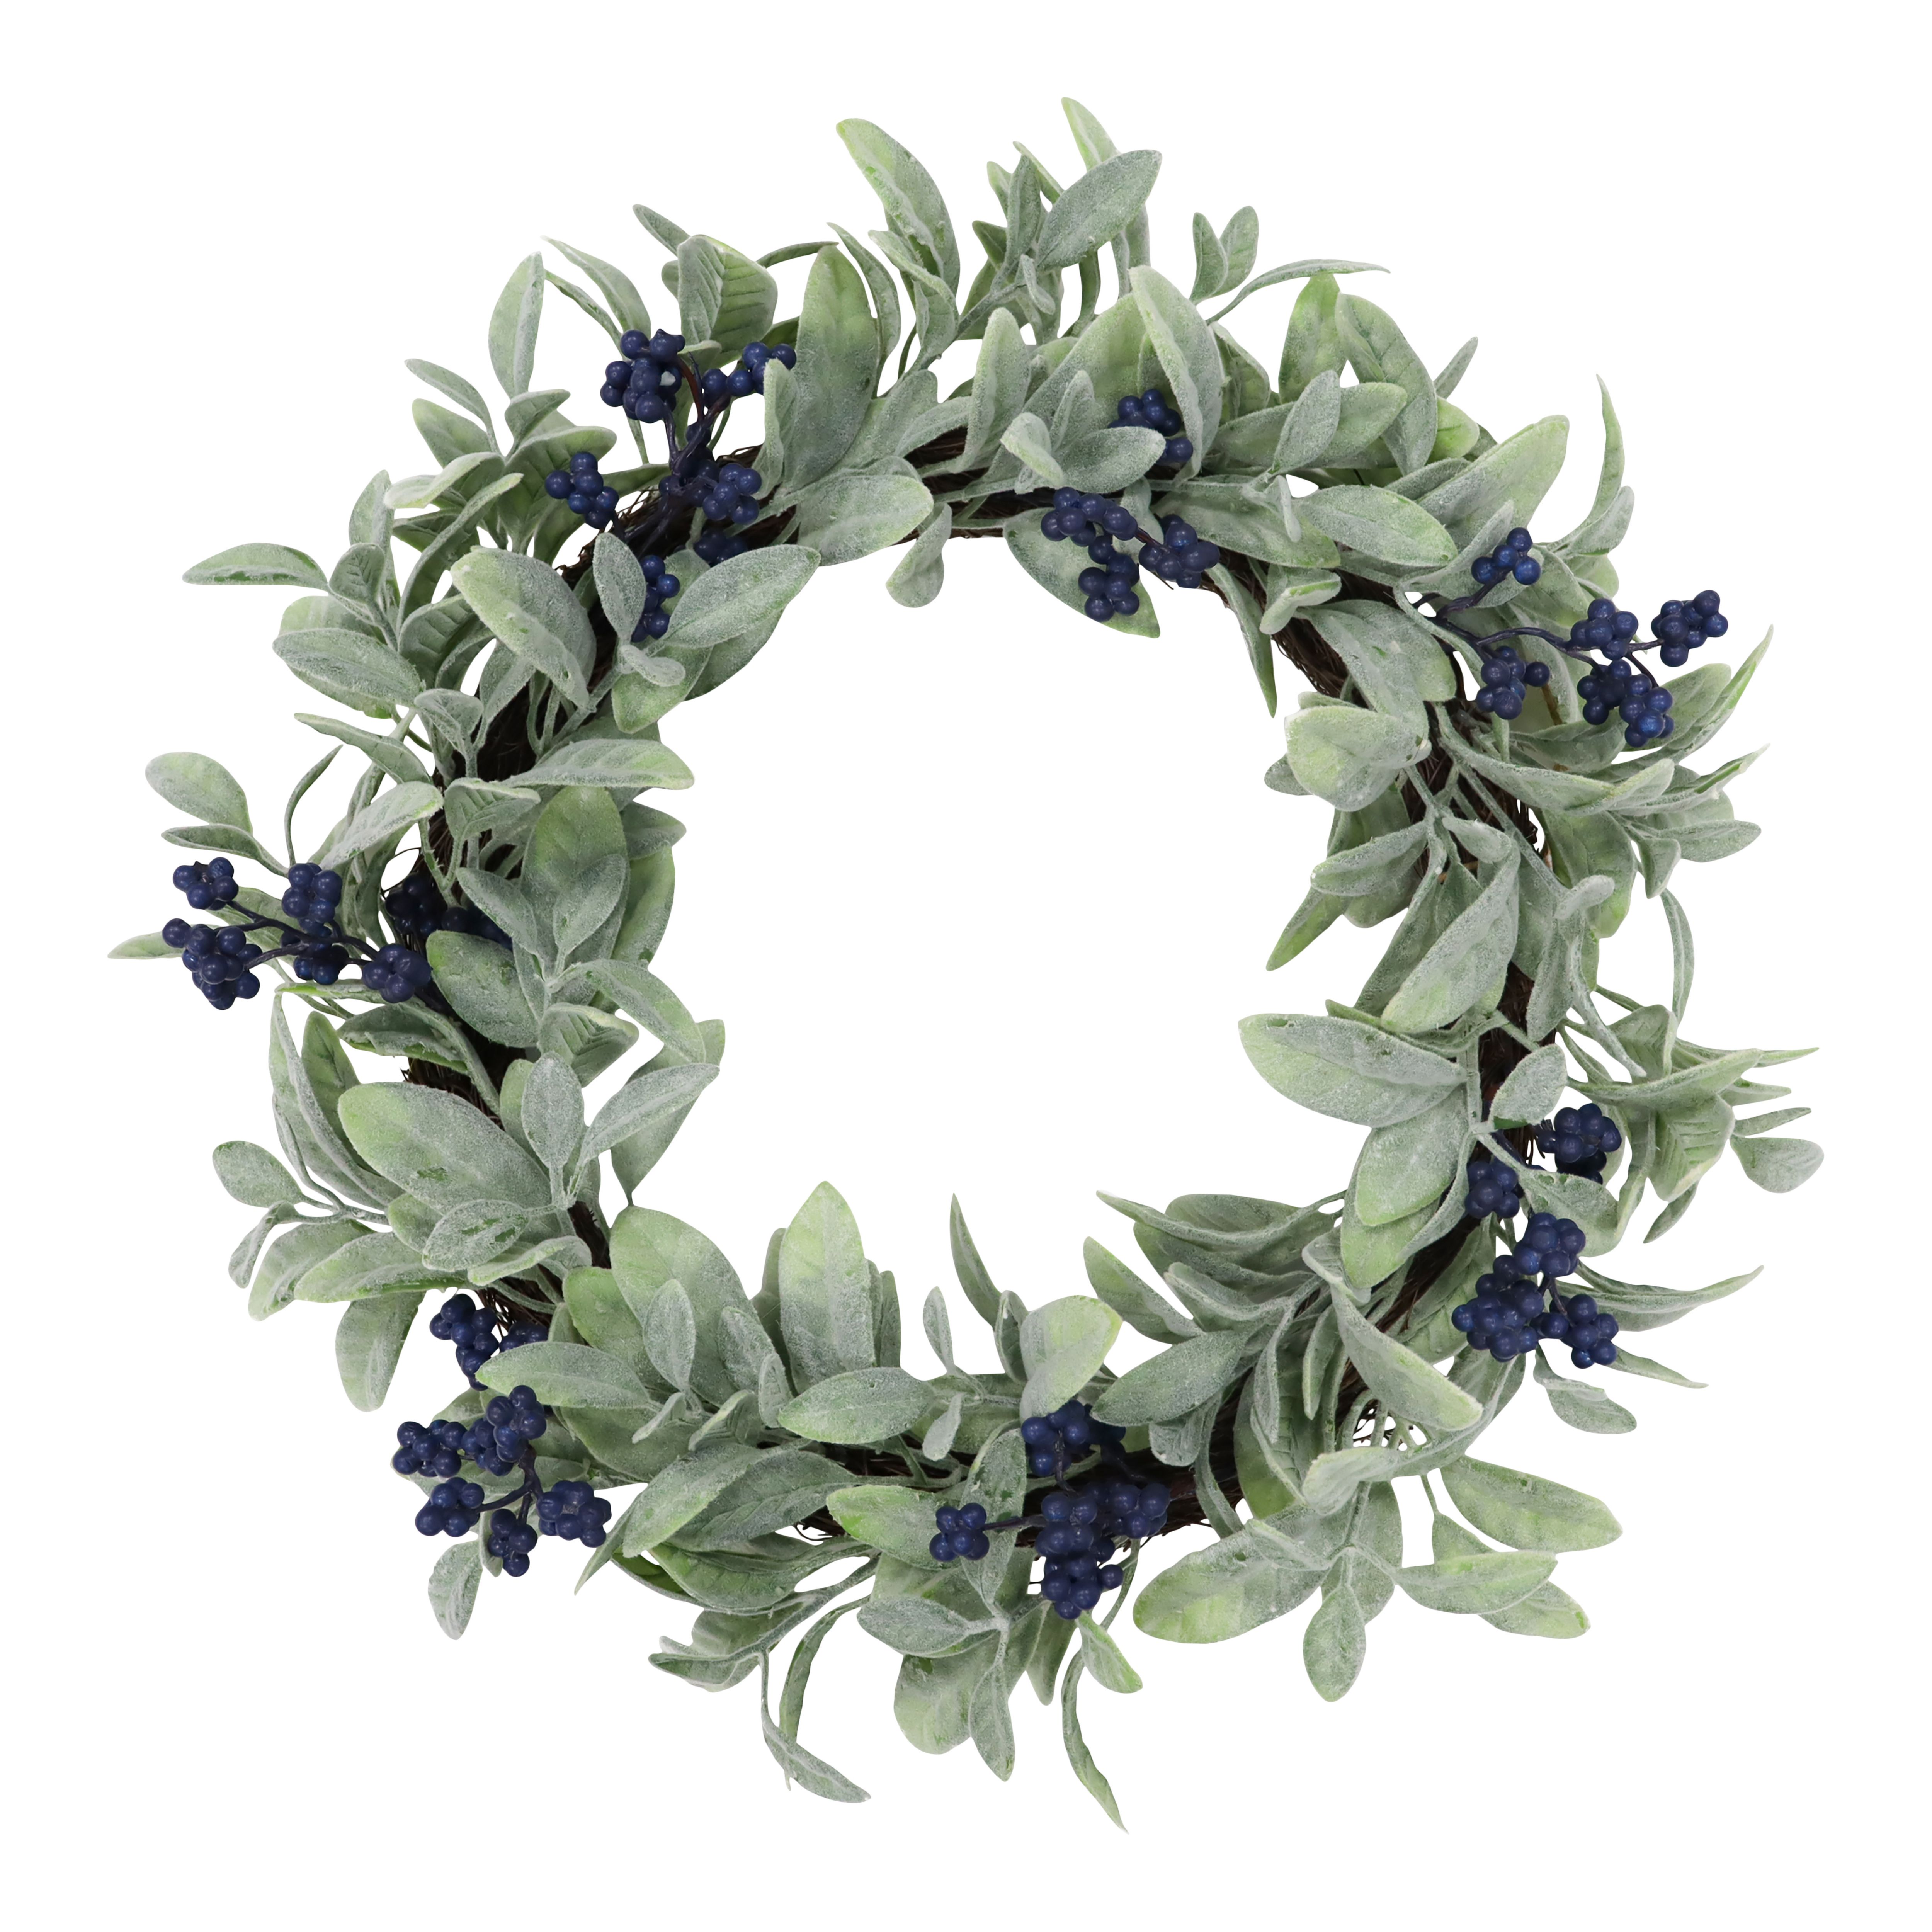 50cm Green Blueberries & leaves Non-illuminated Christmas wreath